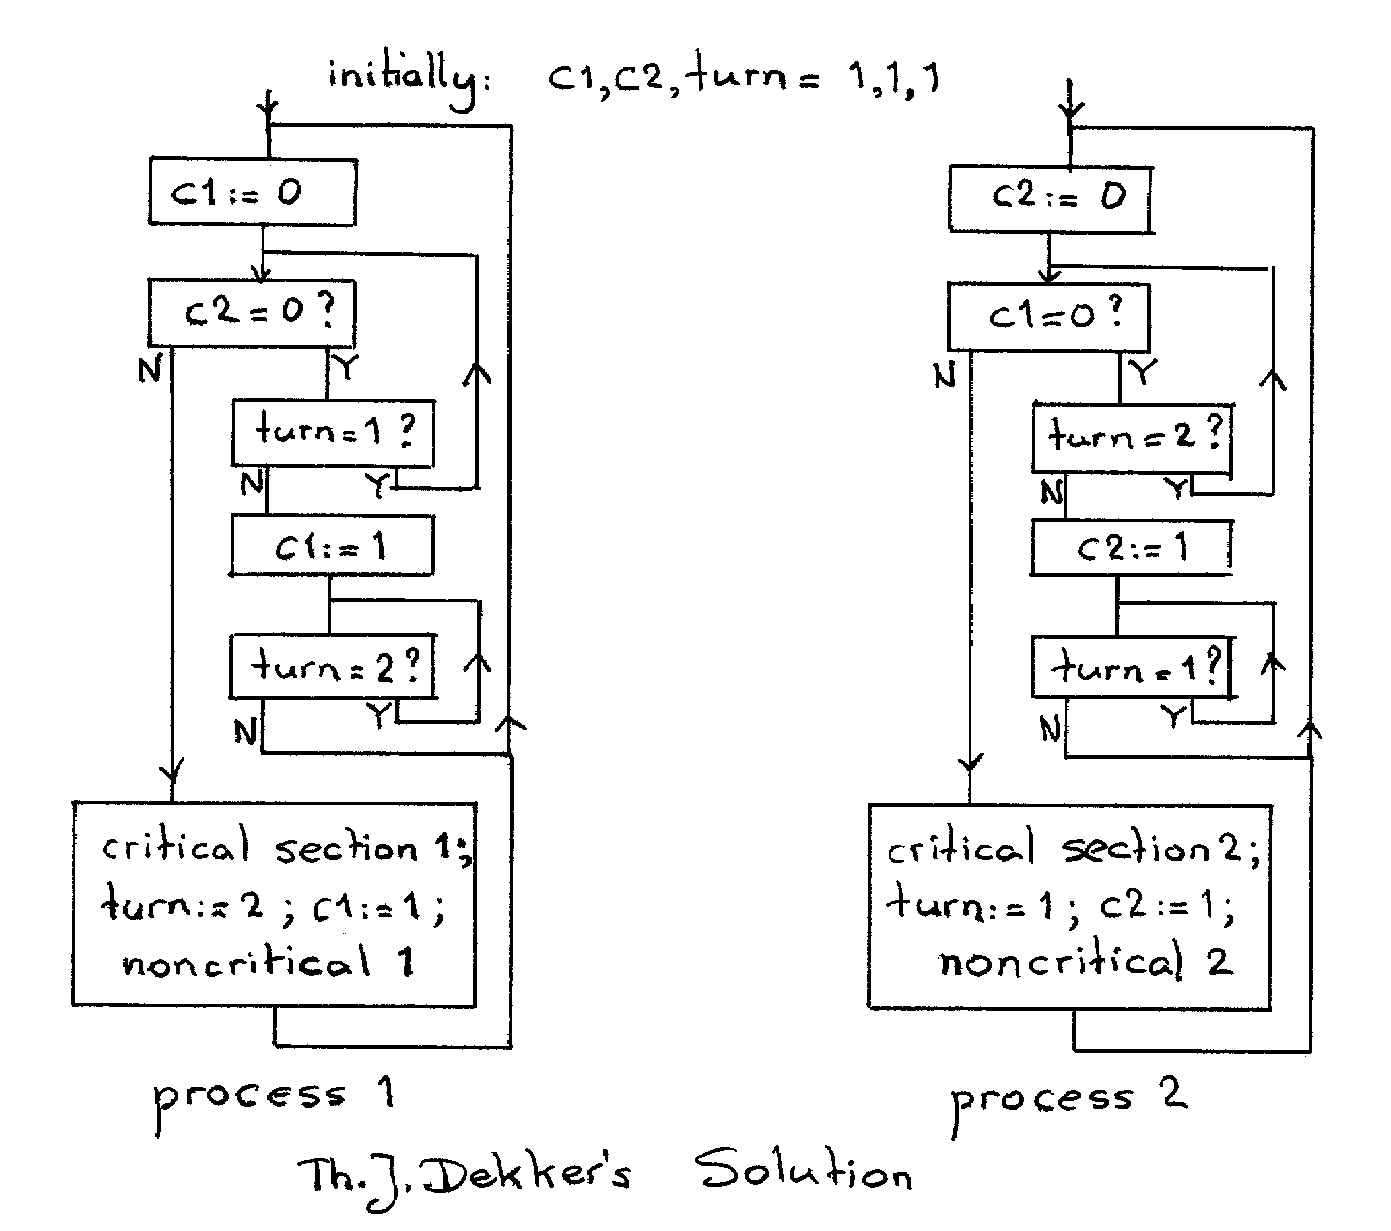 flowcharts of Th. J. Dekker's Solution